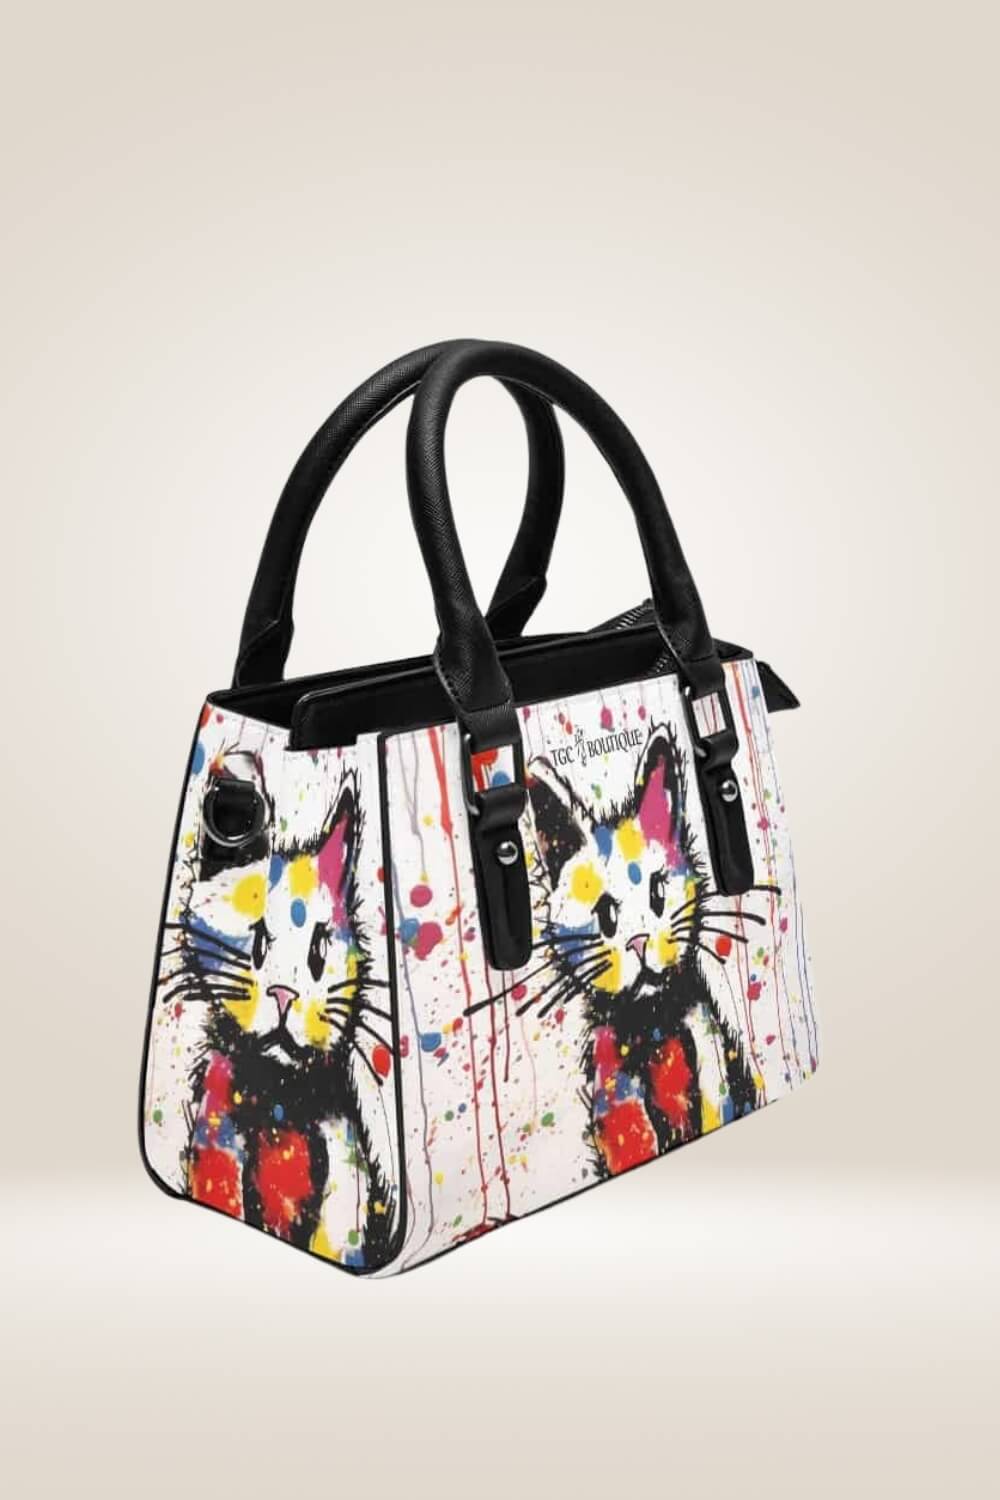 Graffiti Cat Shoulder Bag - TGC Boutique - Shoulder Bag